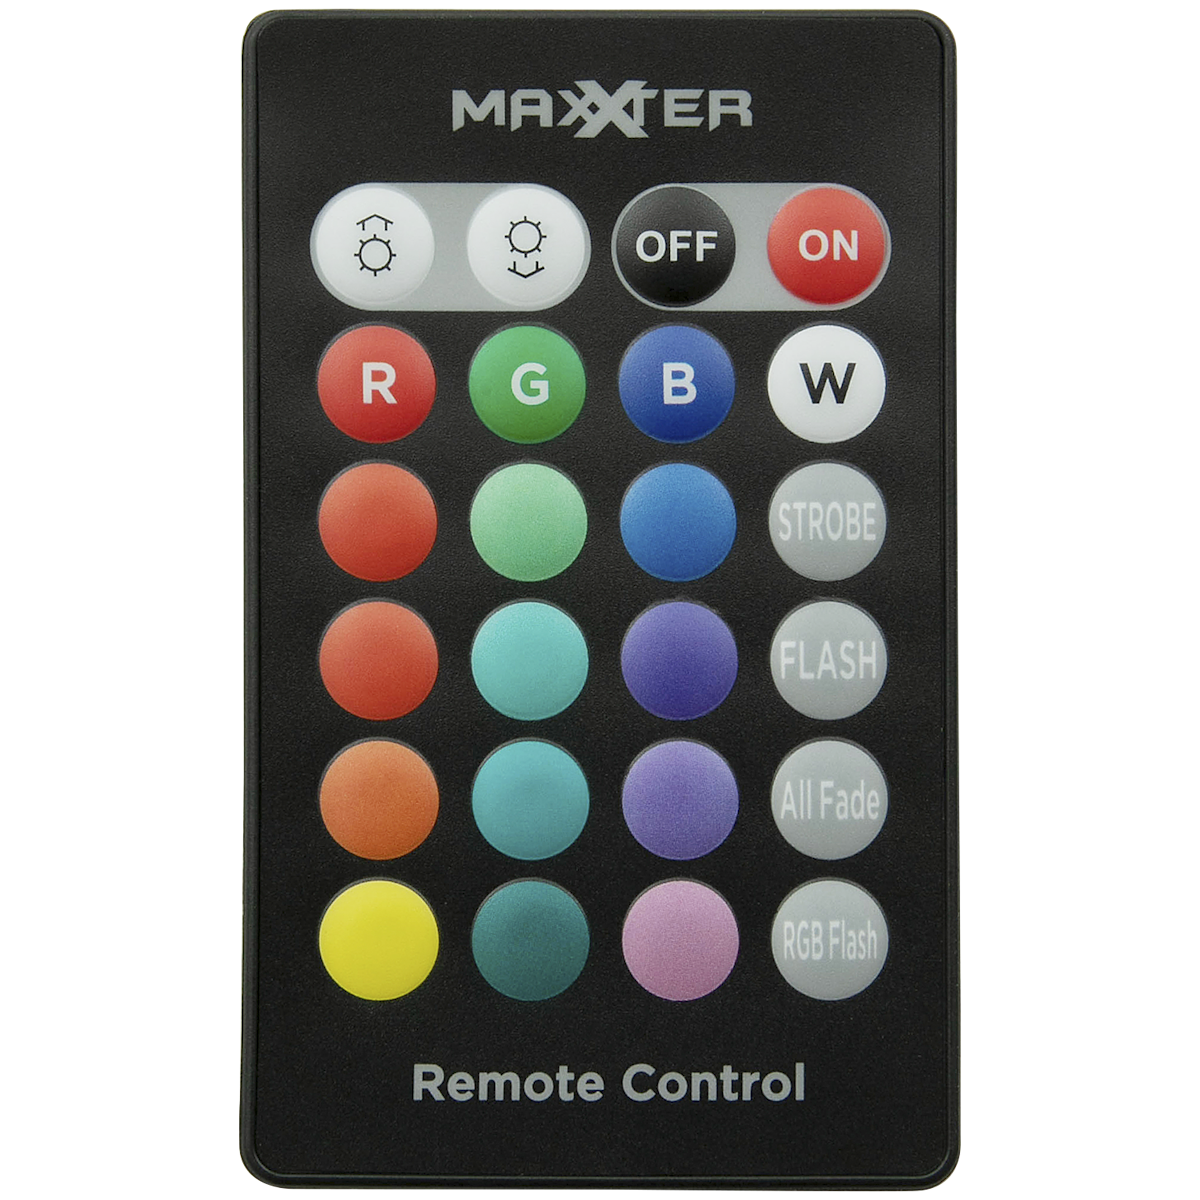 Cable de LED para TV Maxxter